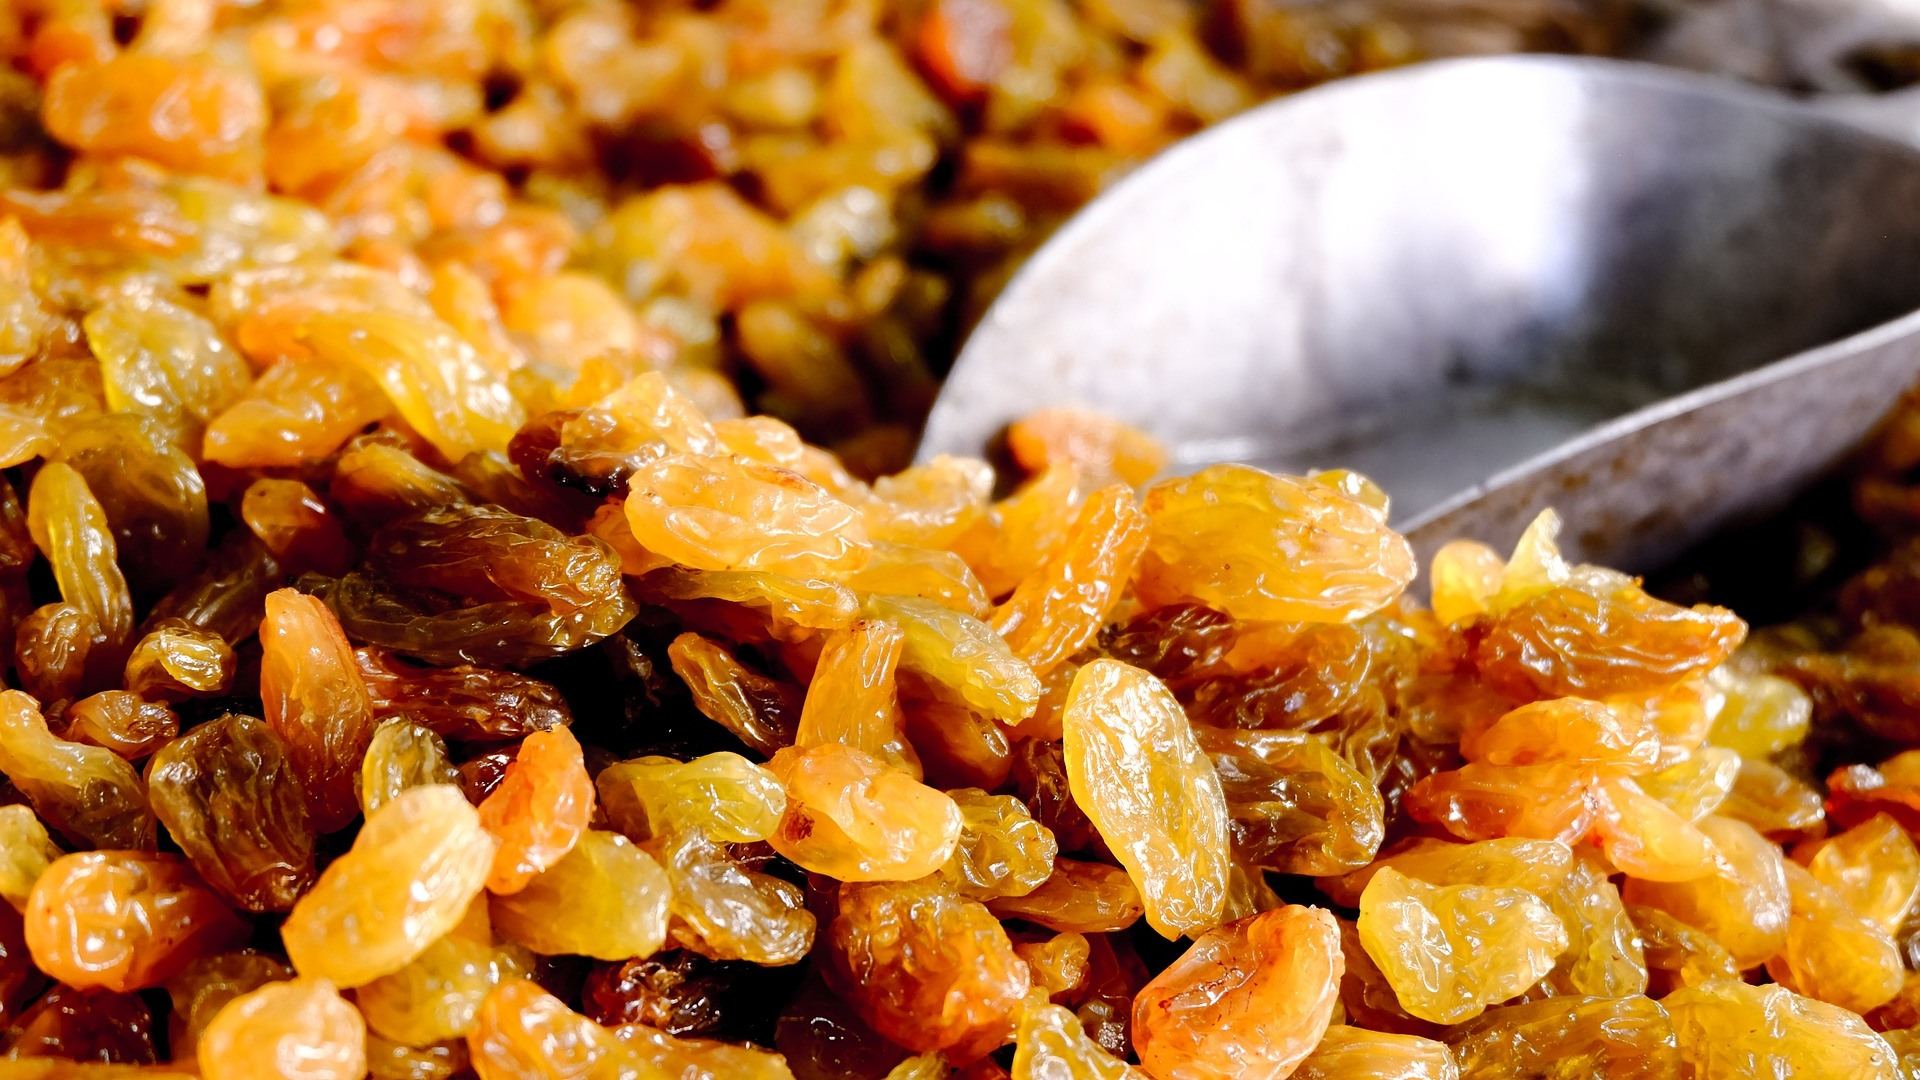 Kazakhstan tops Uzbekistan's list of raisin importers